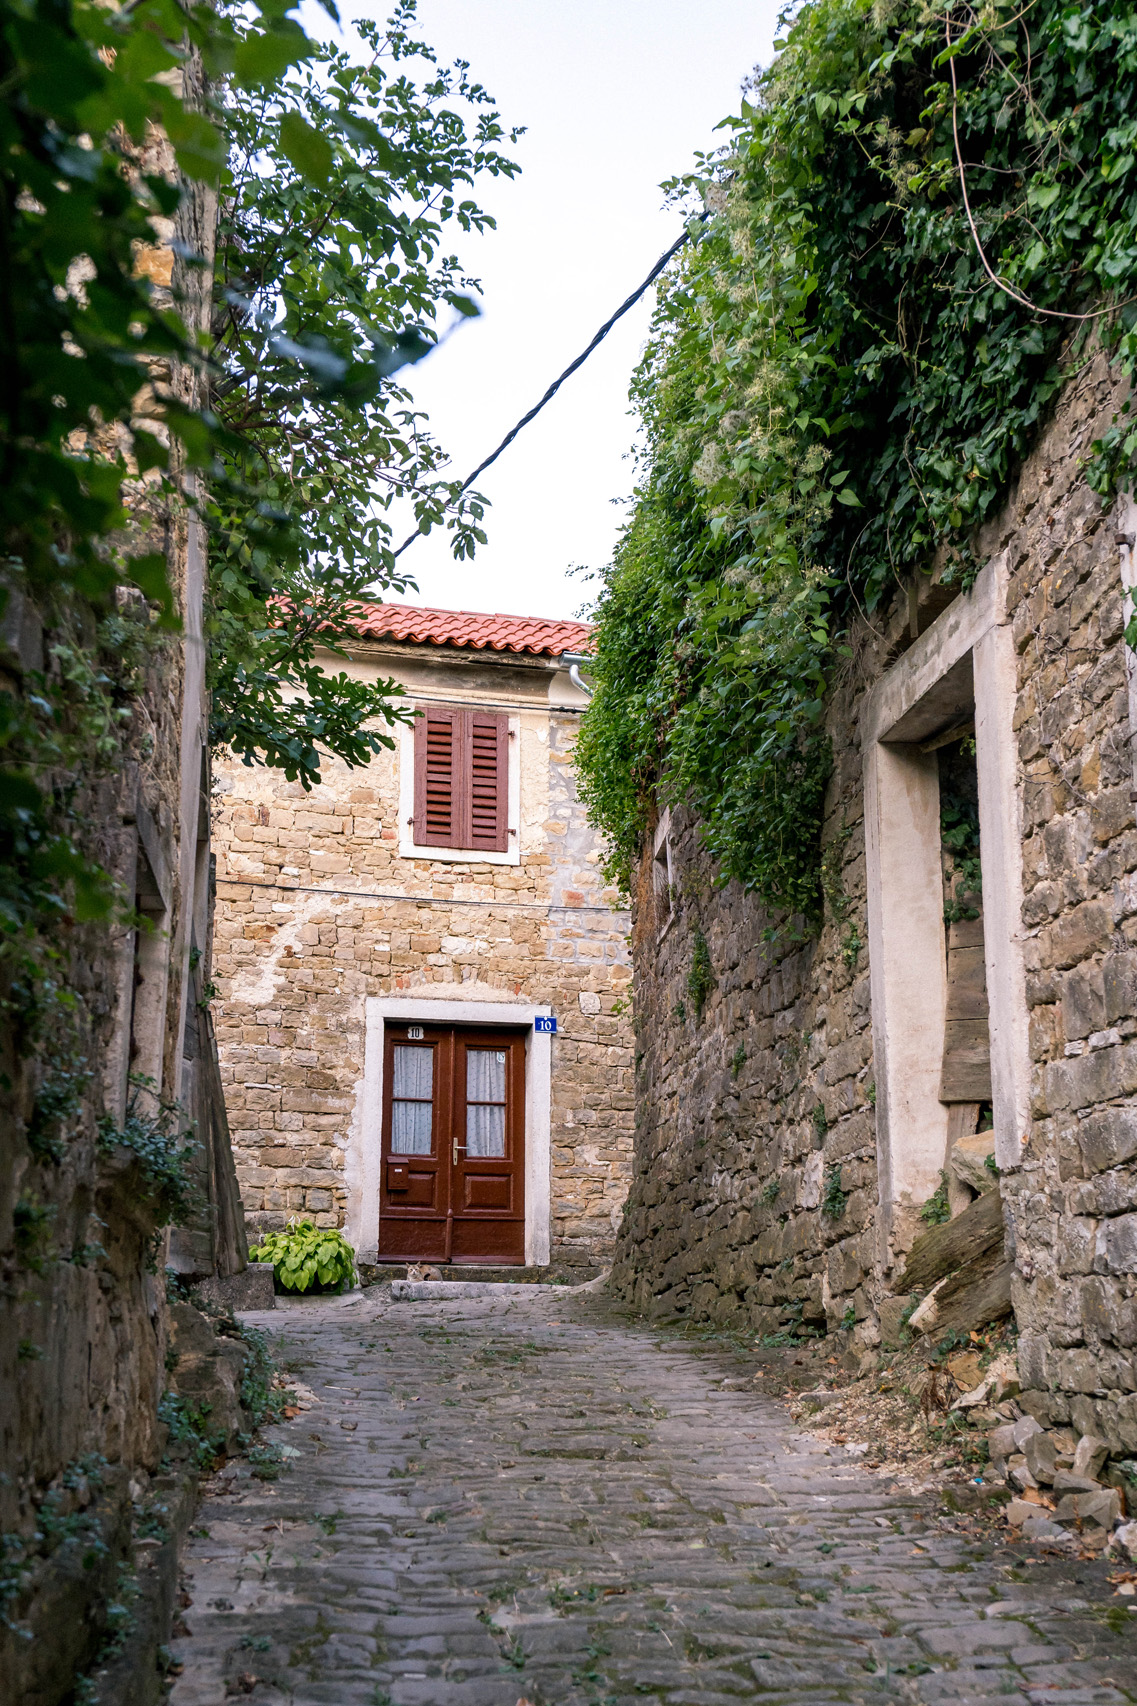 The streets of Zavrsje, Istria